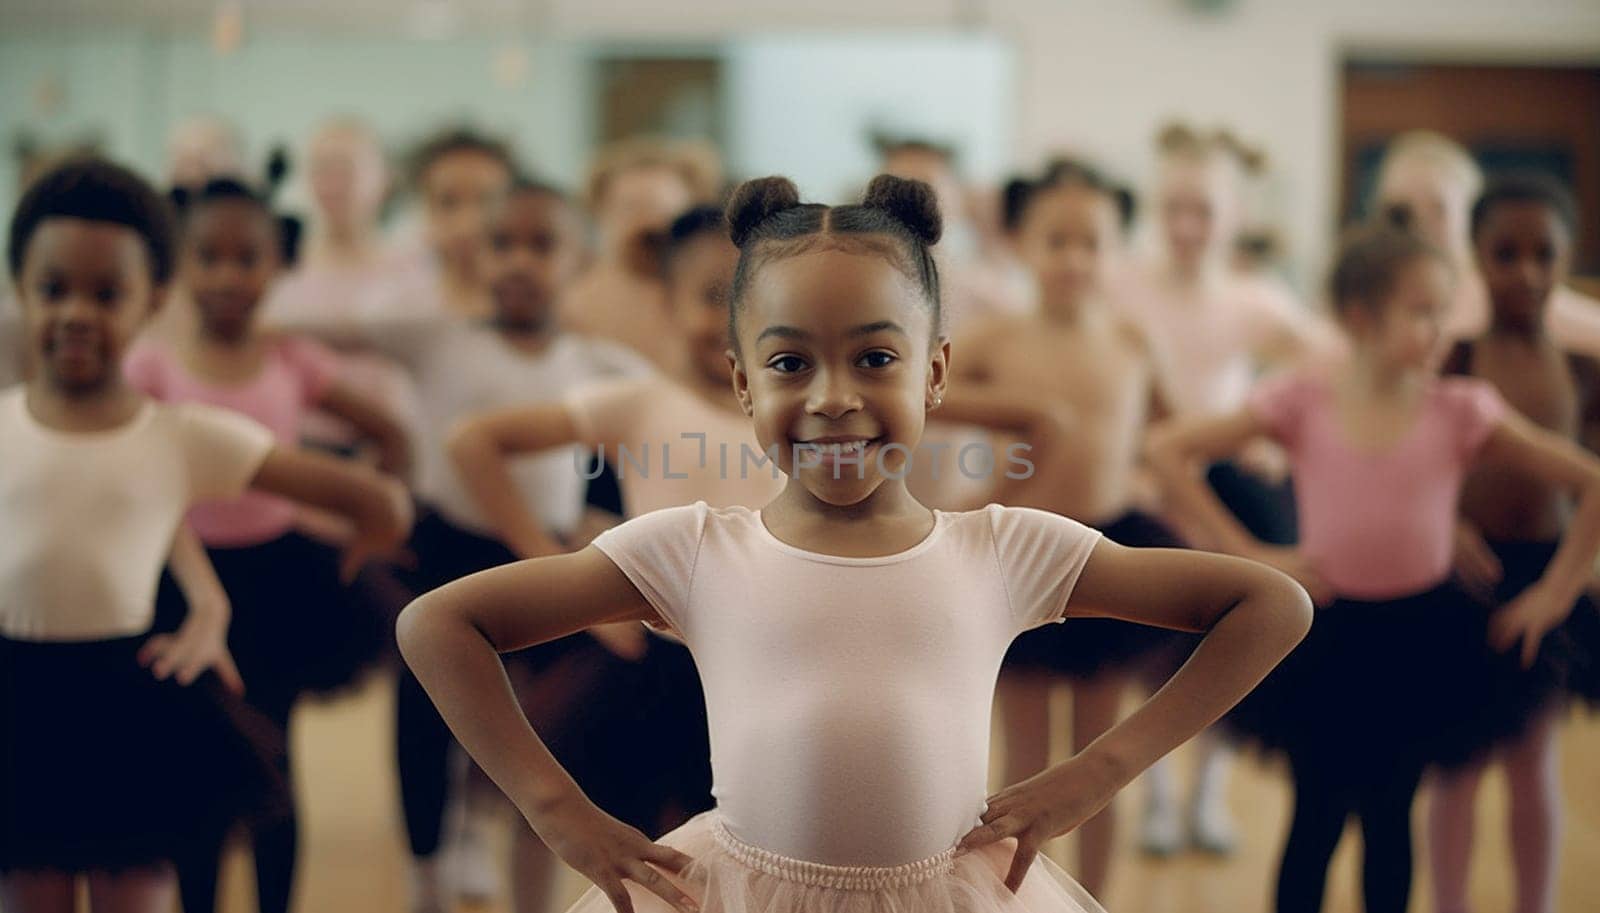 Proud African american little girl on ballet wearing a pink tutu skirt. Children standing in ballet poses in studio. Graceful ballerinas dancing together in studio having fun education by Annebel146